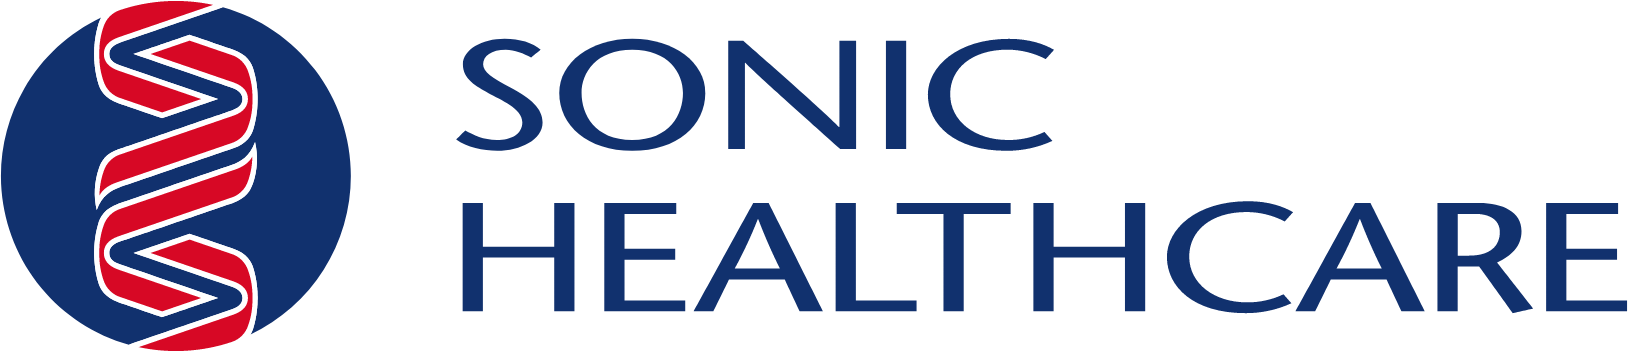 Sonic Healthcare logo large (transparent PNG)